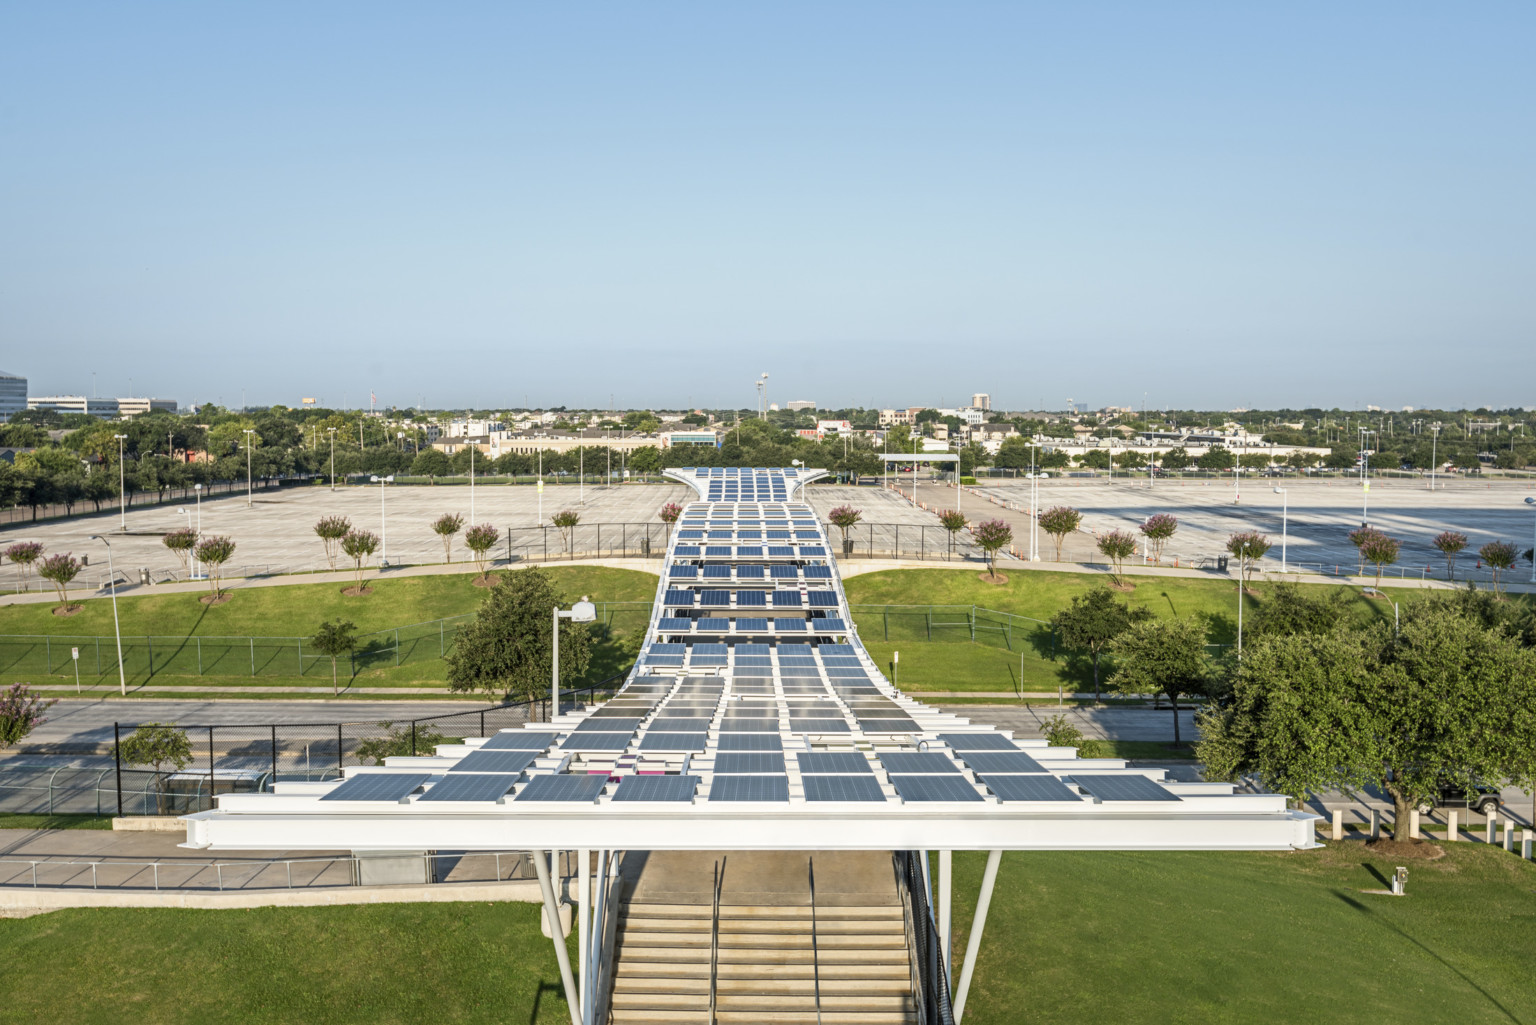 NRG Stadium, home of the Houston Texans, solar panel covered pedestrian bridge connecting stadium to parking lot across road